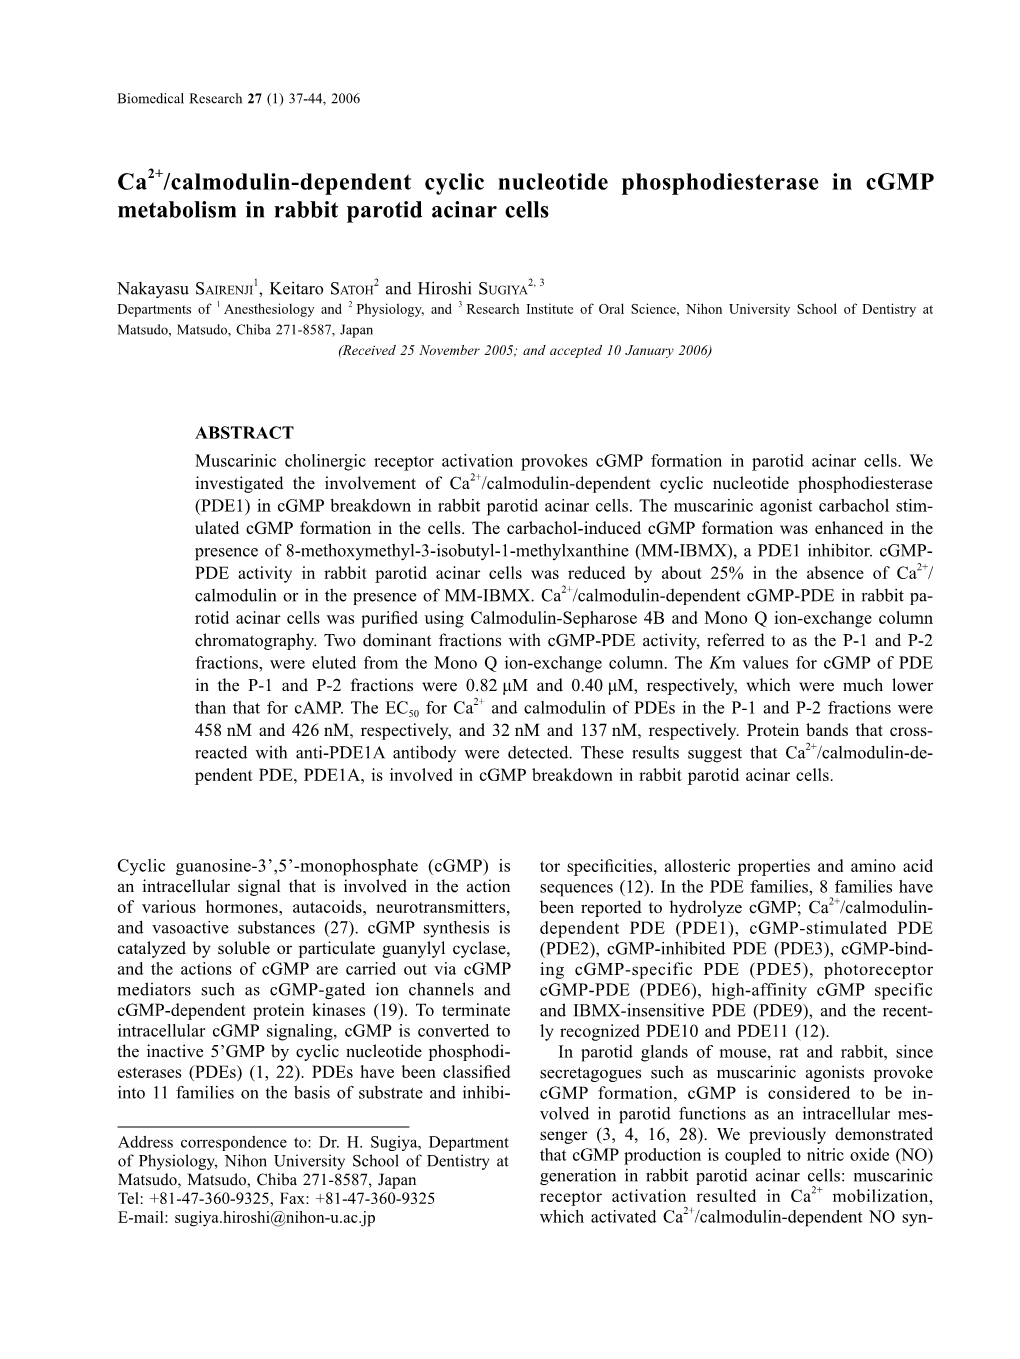 Ca2+/Calmodulin-Dependent Cyclic Nucleotide Phosphodiesterase in Cgmp Metabolism in Rabbit Parotid Acinar Cells